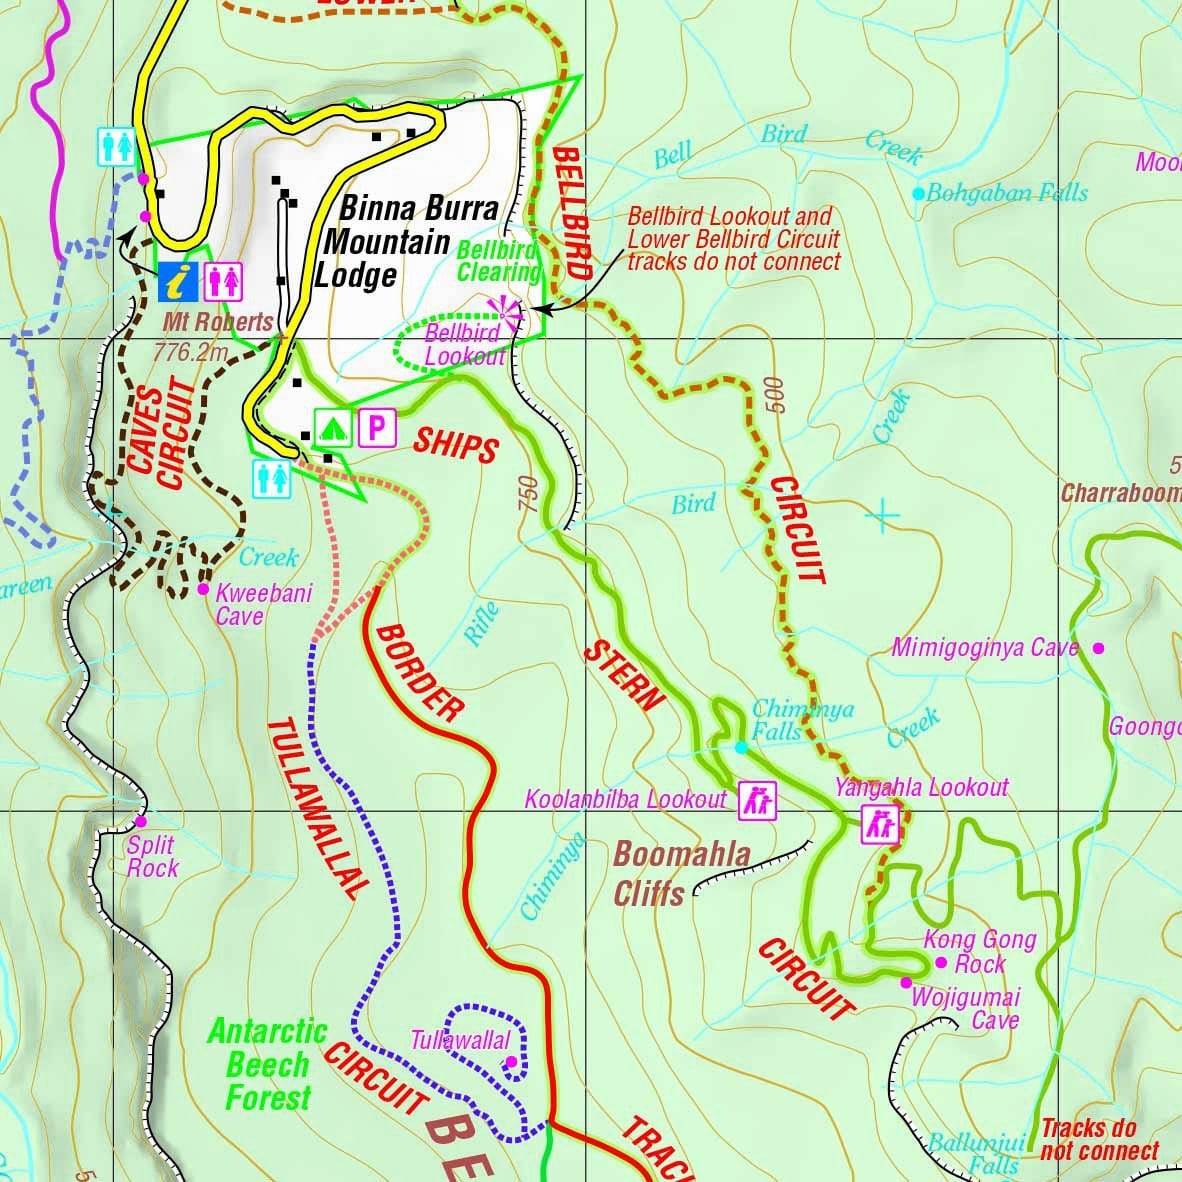 Hema Lamington National Park Map | Hema